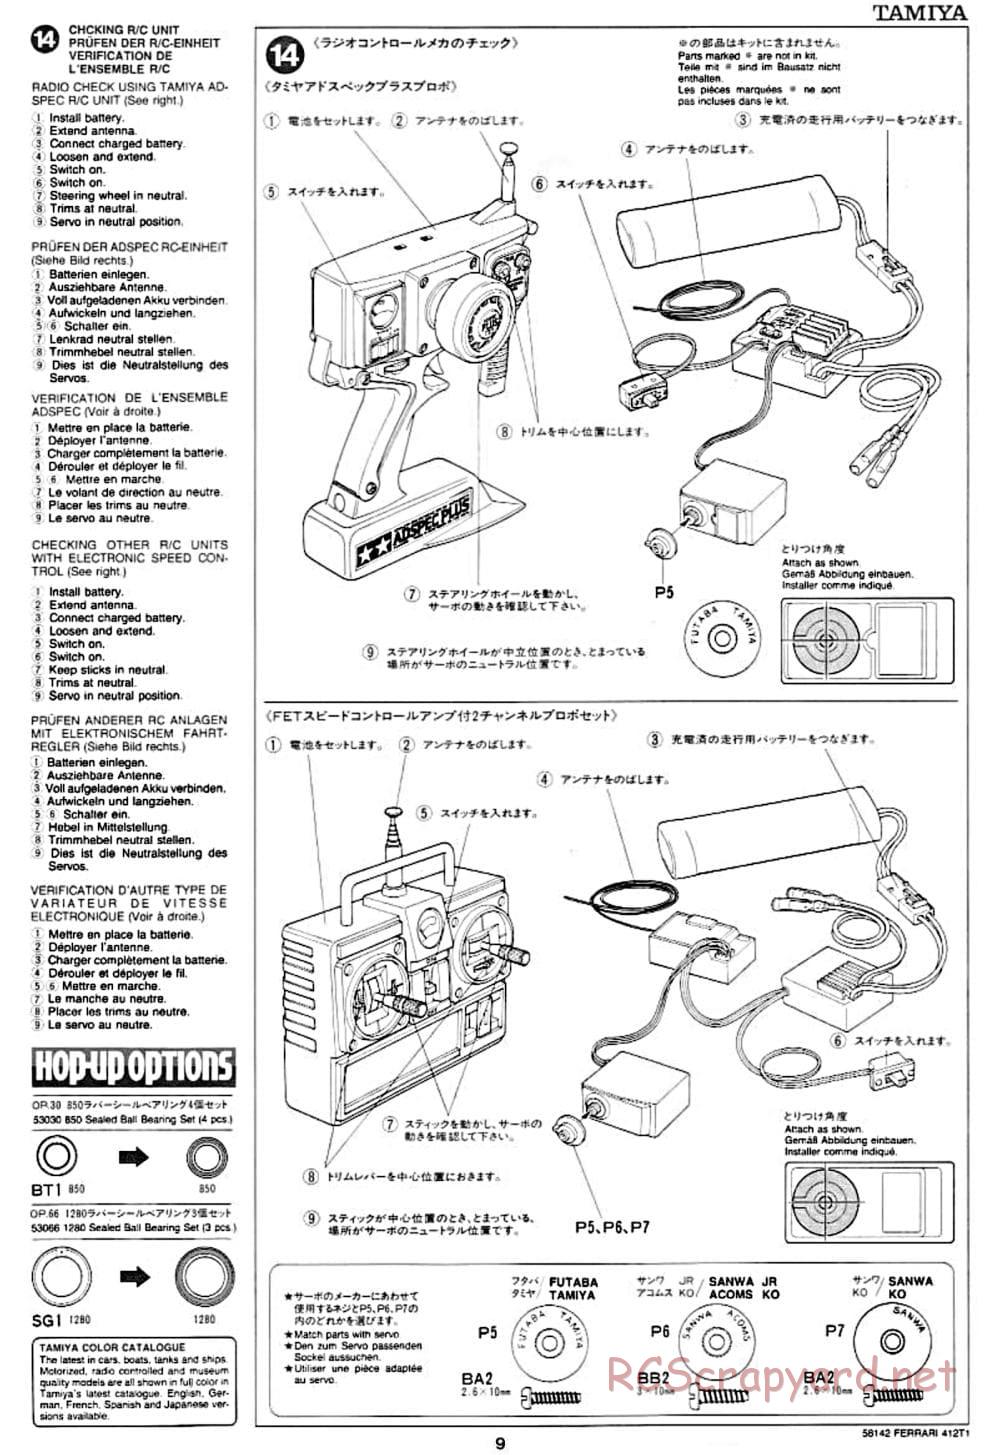 Tamiya - Ferrari 412T1 - F103 Chassis - Manual - Page 9